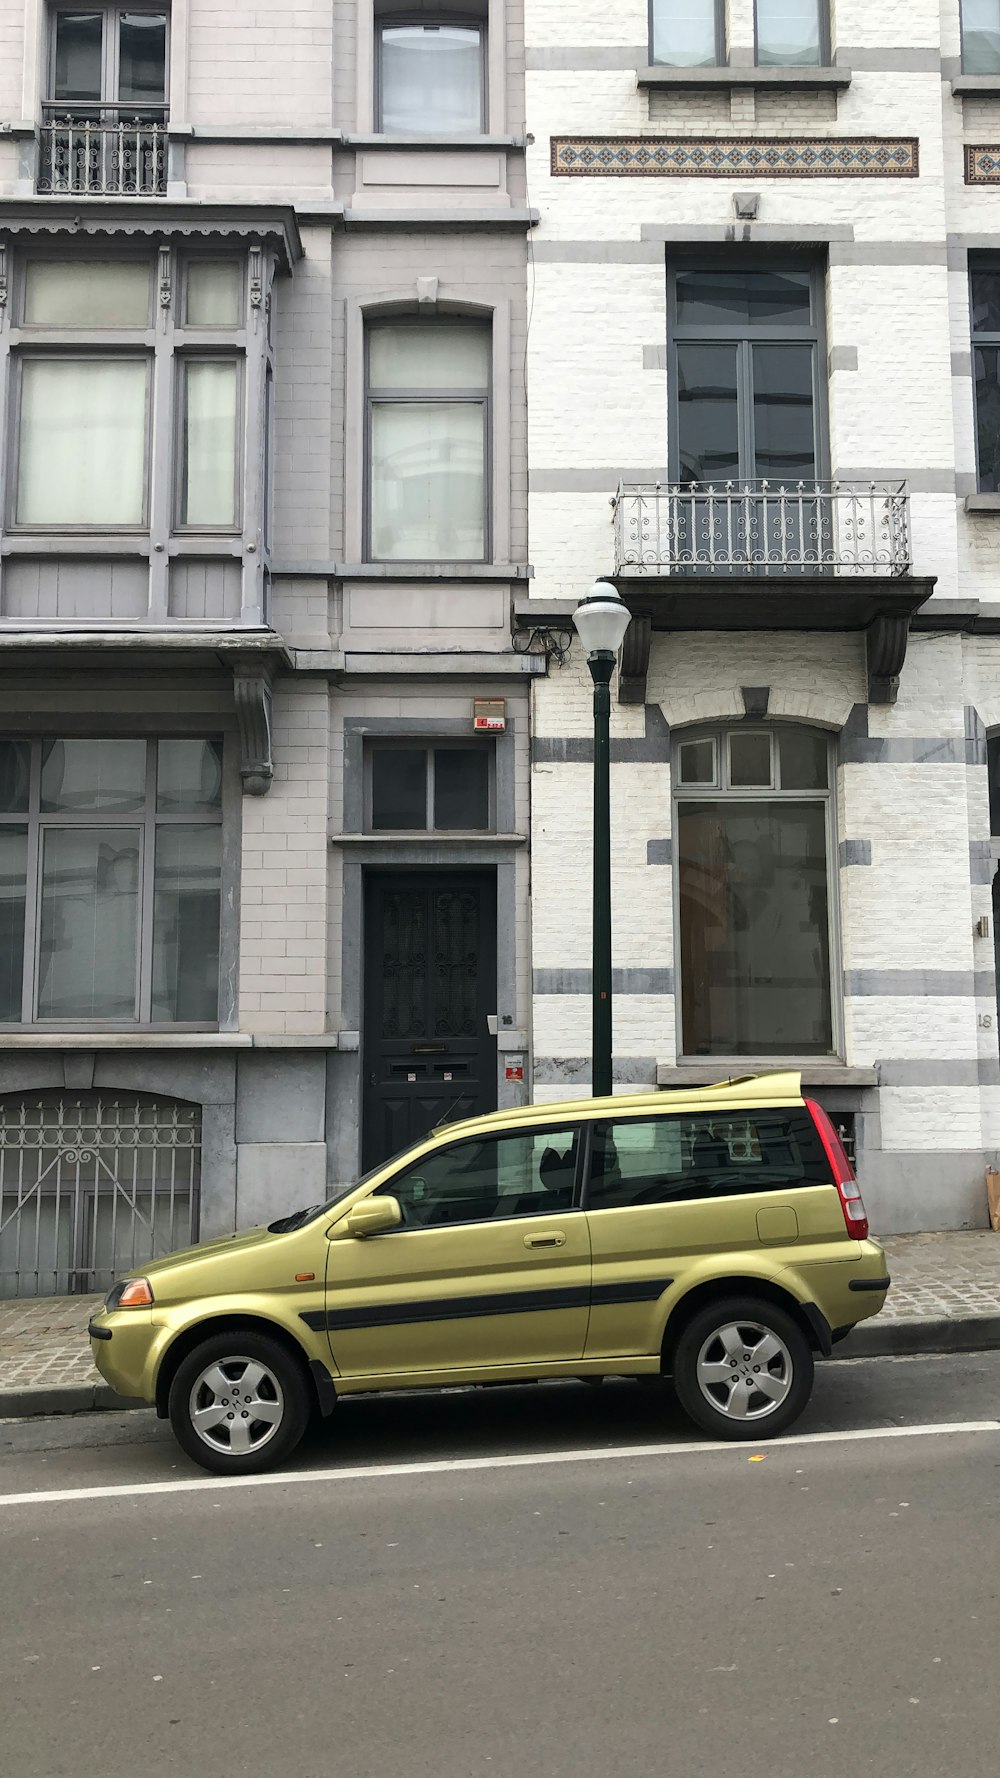 hatchback amarelo de 3 portas estacionado ao lado do edifício de concreto cinza durante o dia